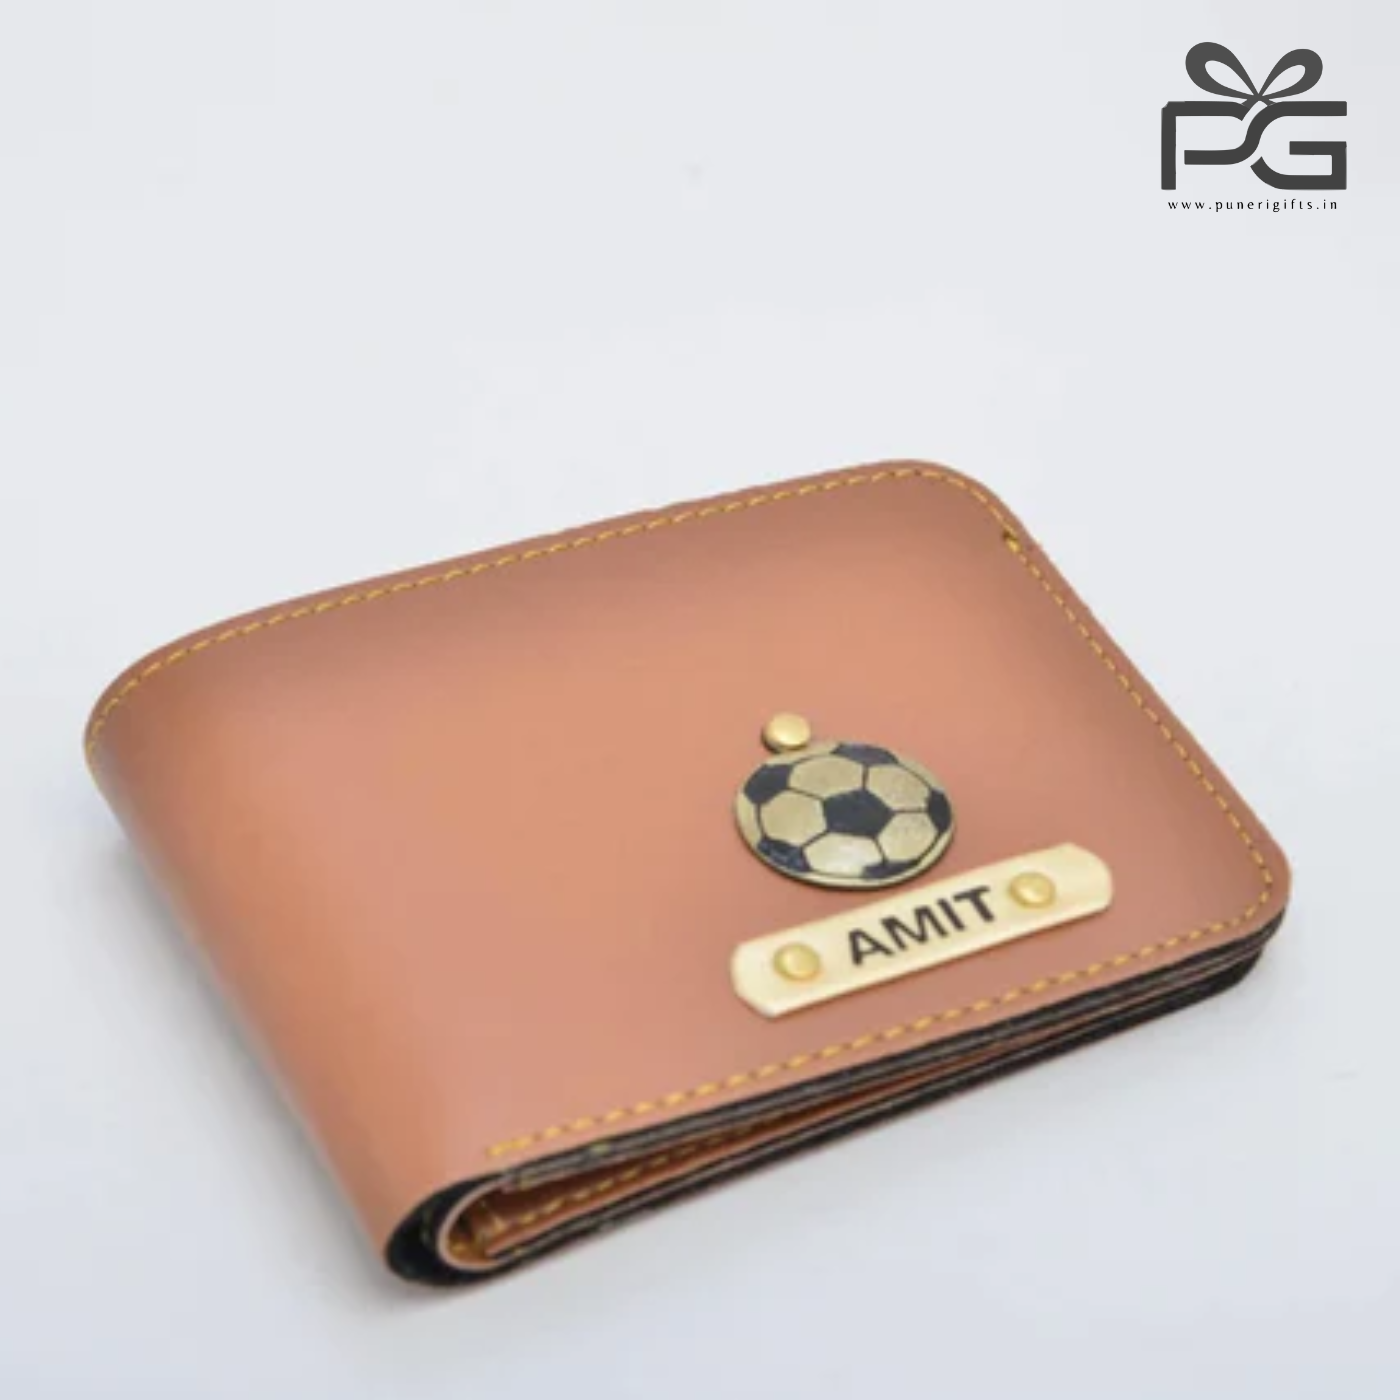 Customized Men's Wallet - Personalised Wallet With Name, पुरुषों का बटुआ,  मेंस वॉलेट - Gifting Studio, Chennai | ID: 27092825733